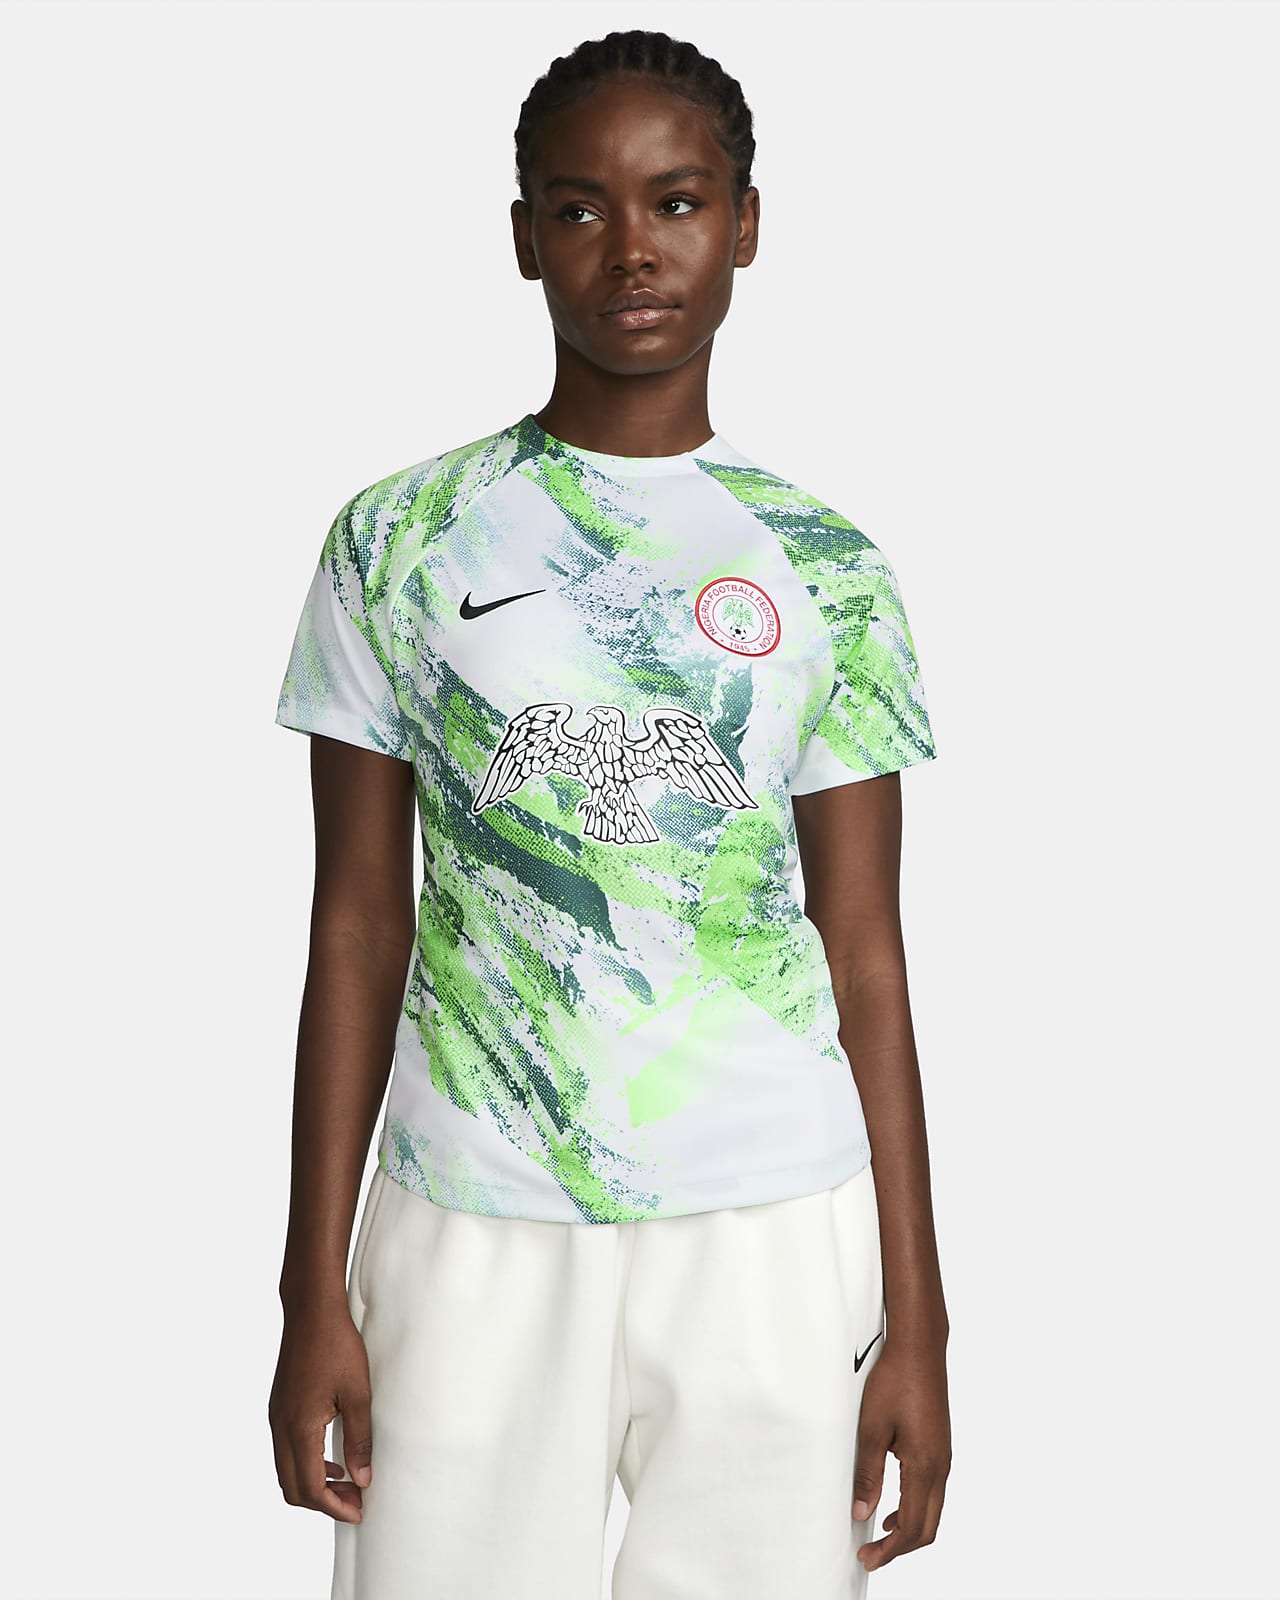 Nike Soccer thinks women's jerseys need to show more skin - Stars